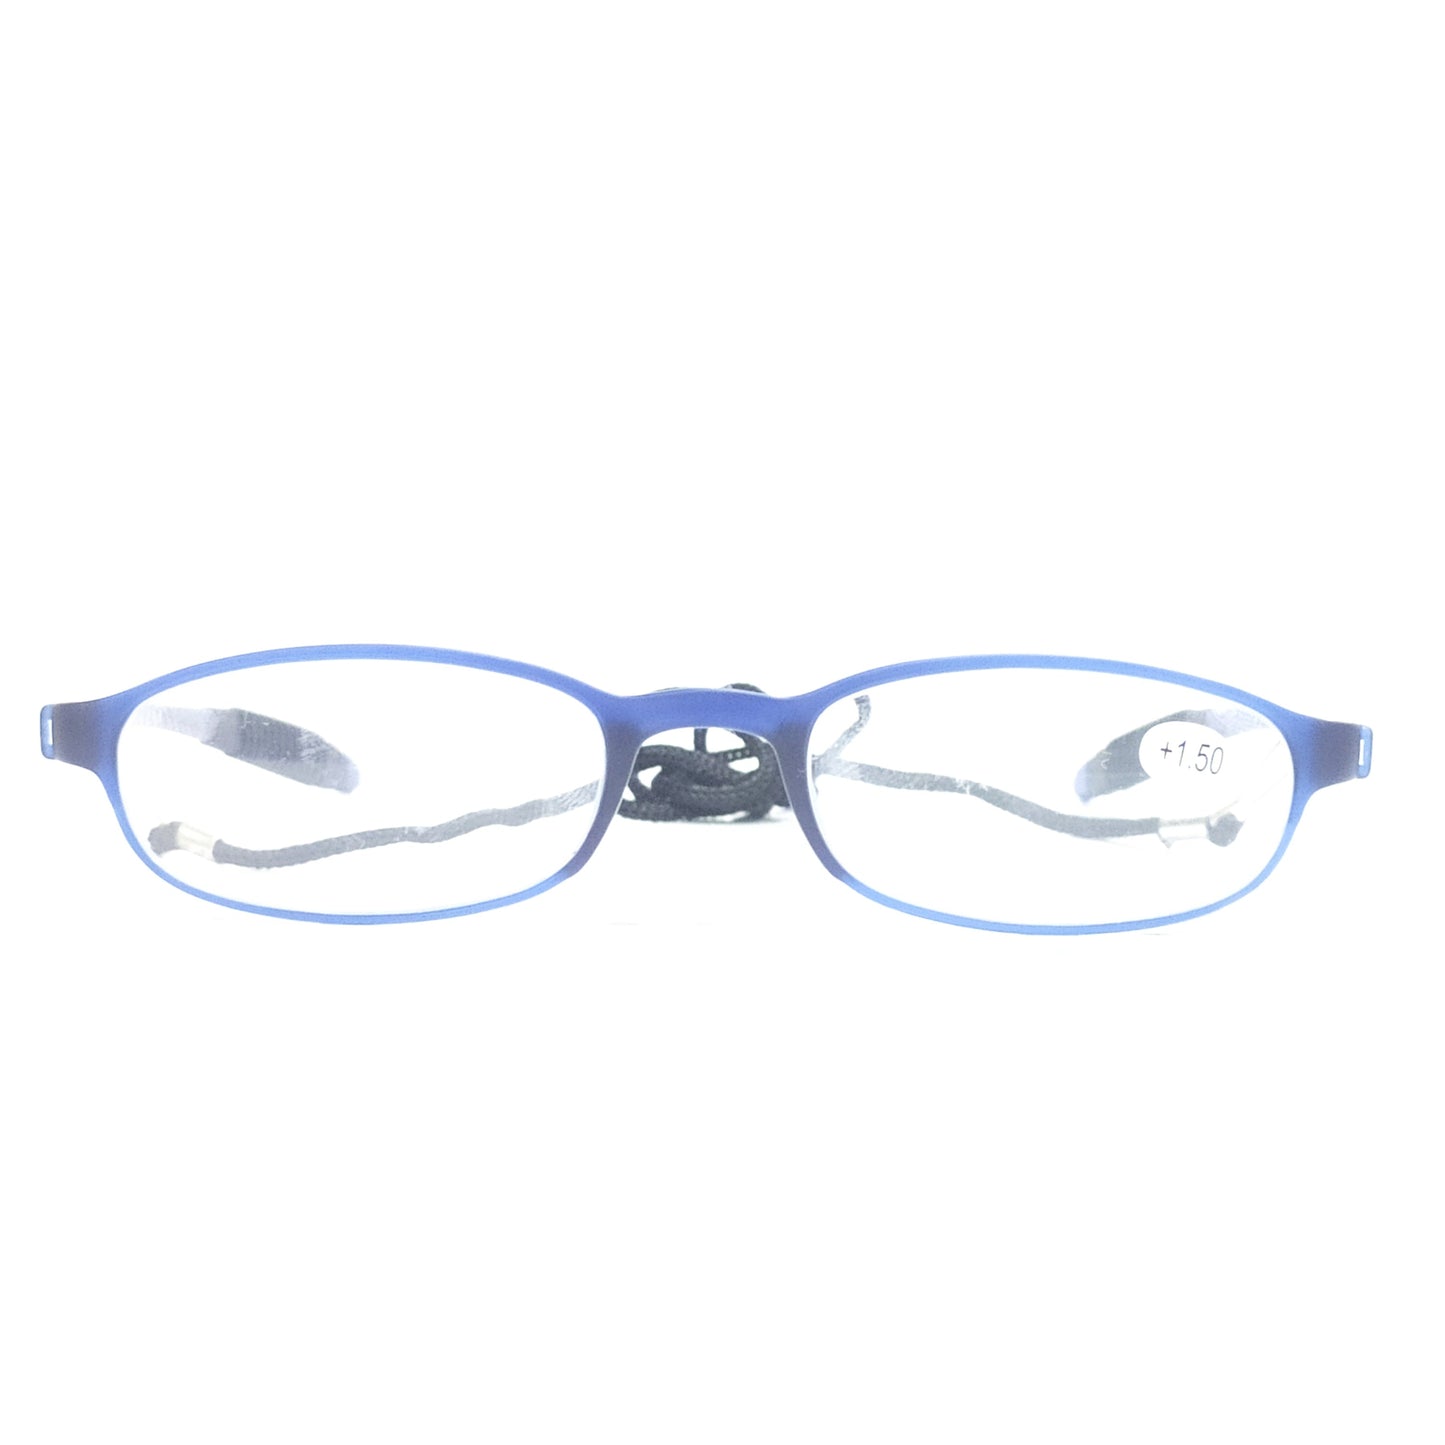 Comfortable Flexi-Thread Memory Glasses for Men and Women, TR90 Frame in Blue